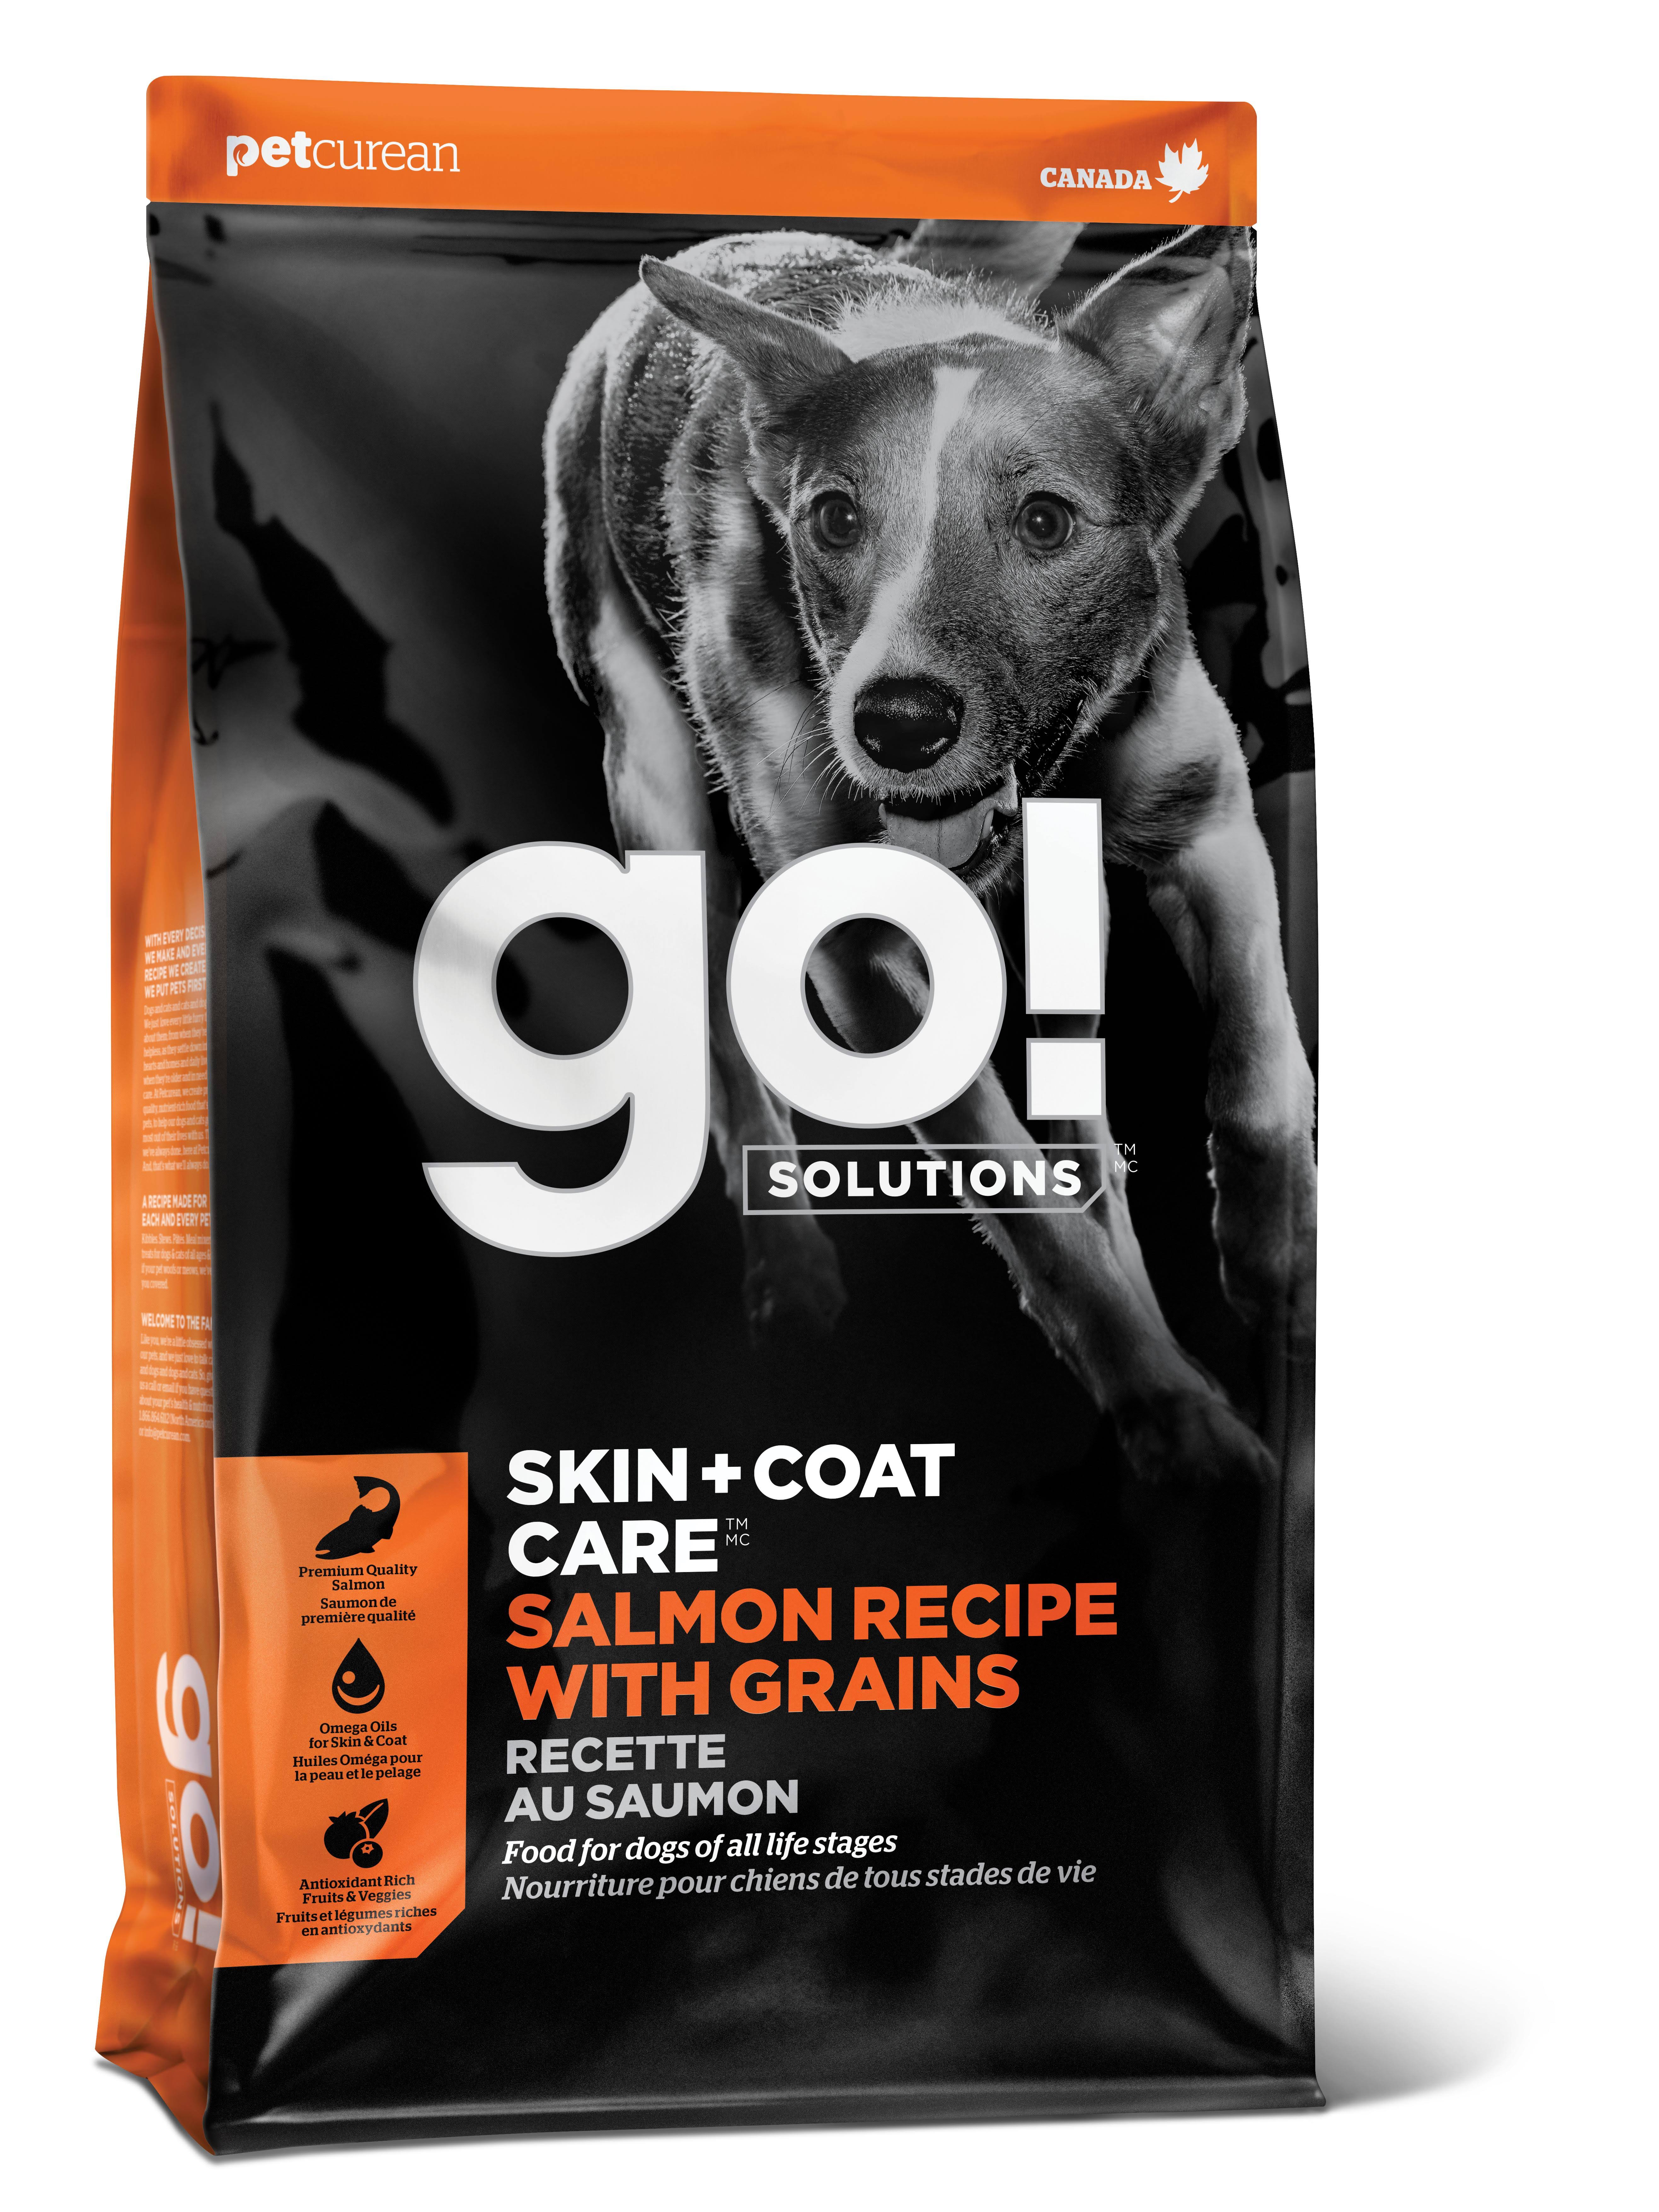 Go! Solutions Skin + Coat Care Salmon Dry Dog Food, 25-lb